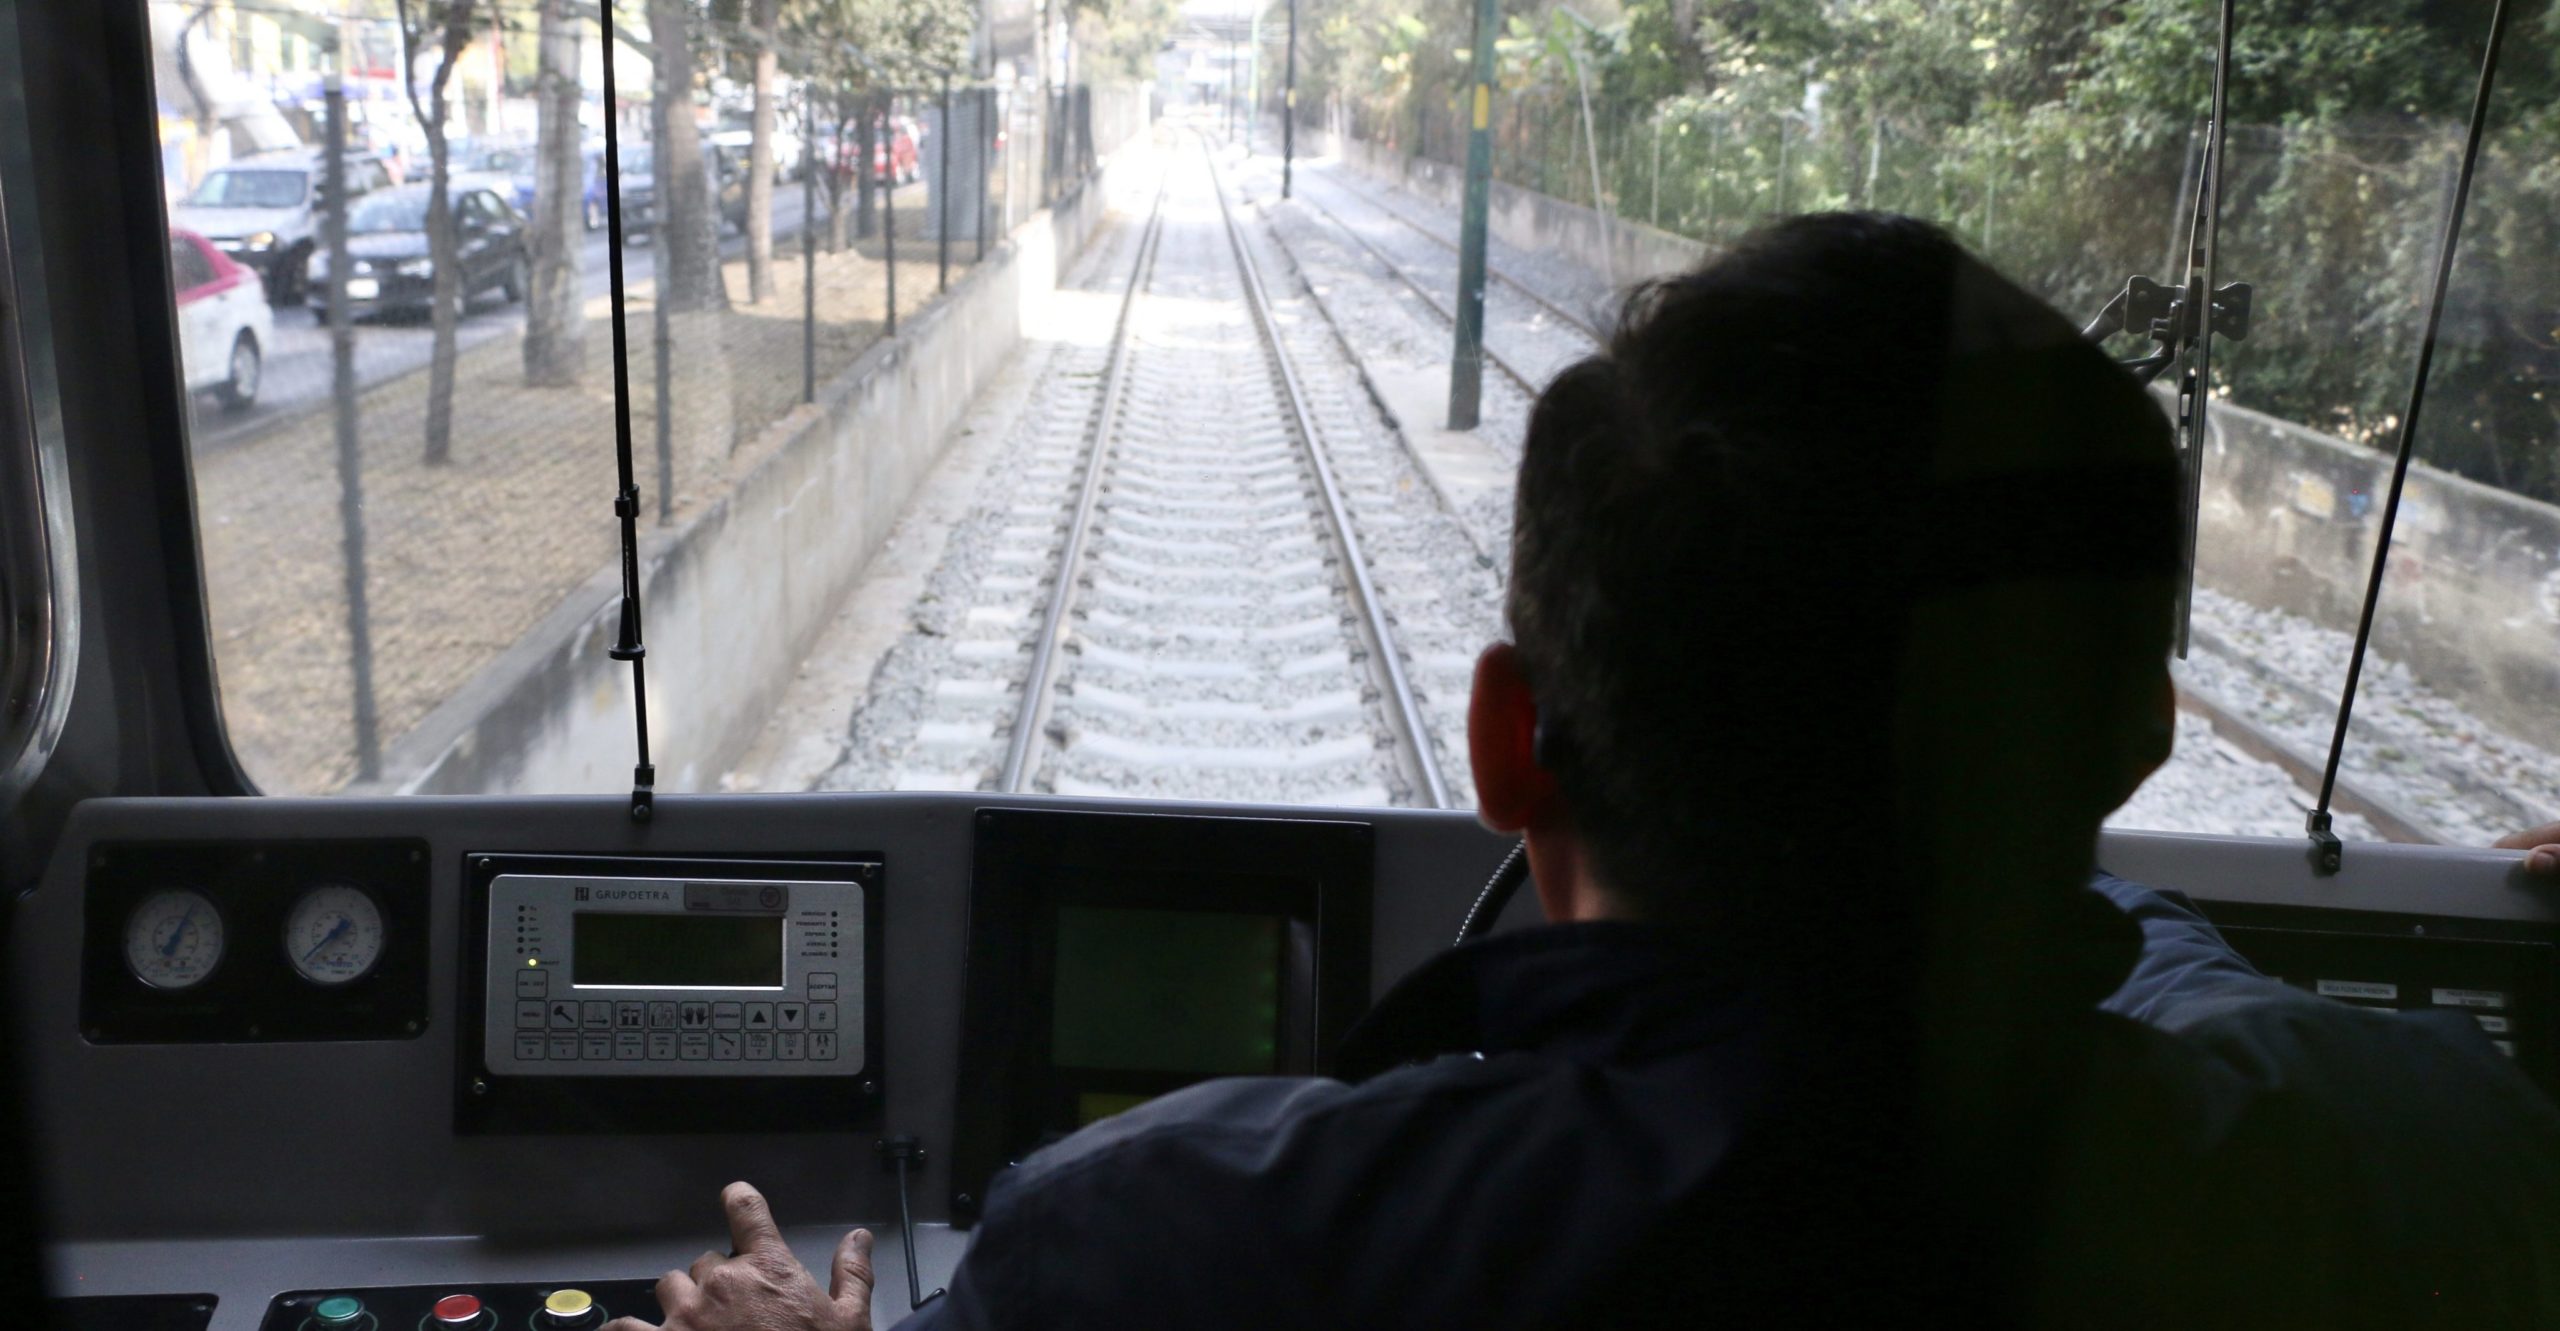 Despite rehabilitation work, users report delays in Light Rail